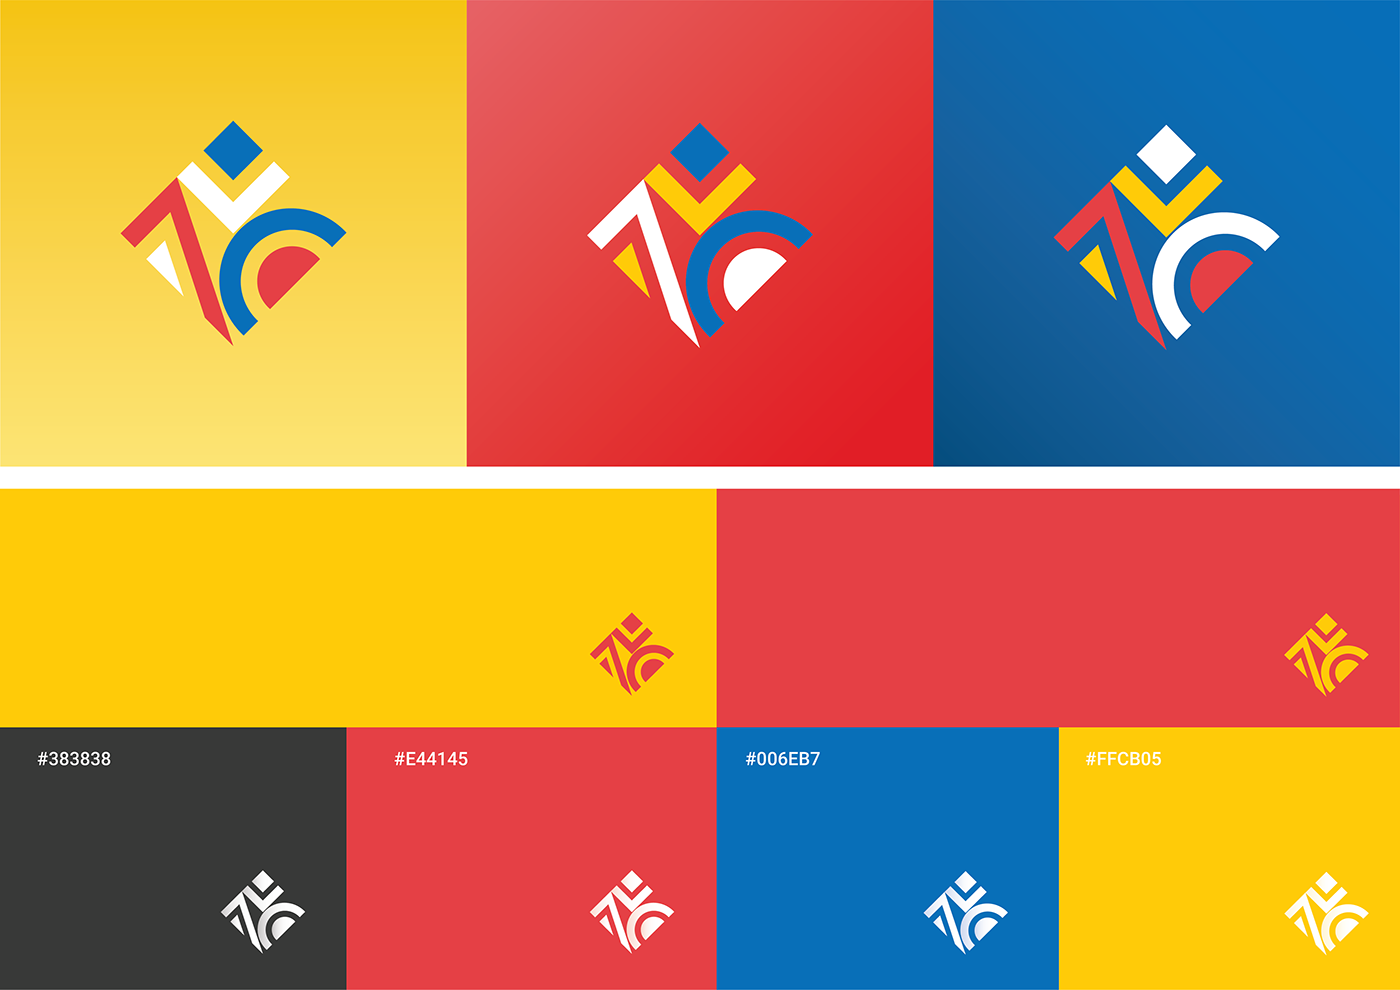 art direction  brand guidelines brand identity branding  Creative Design graphic design  innovation Logo Design Tamaiyuz visual identity